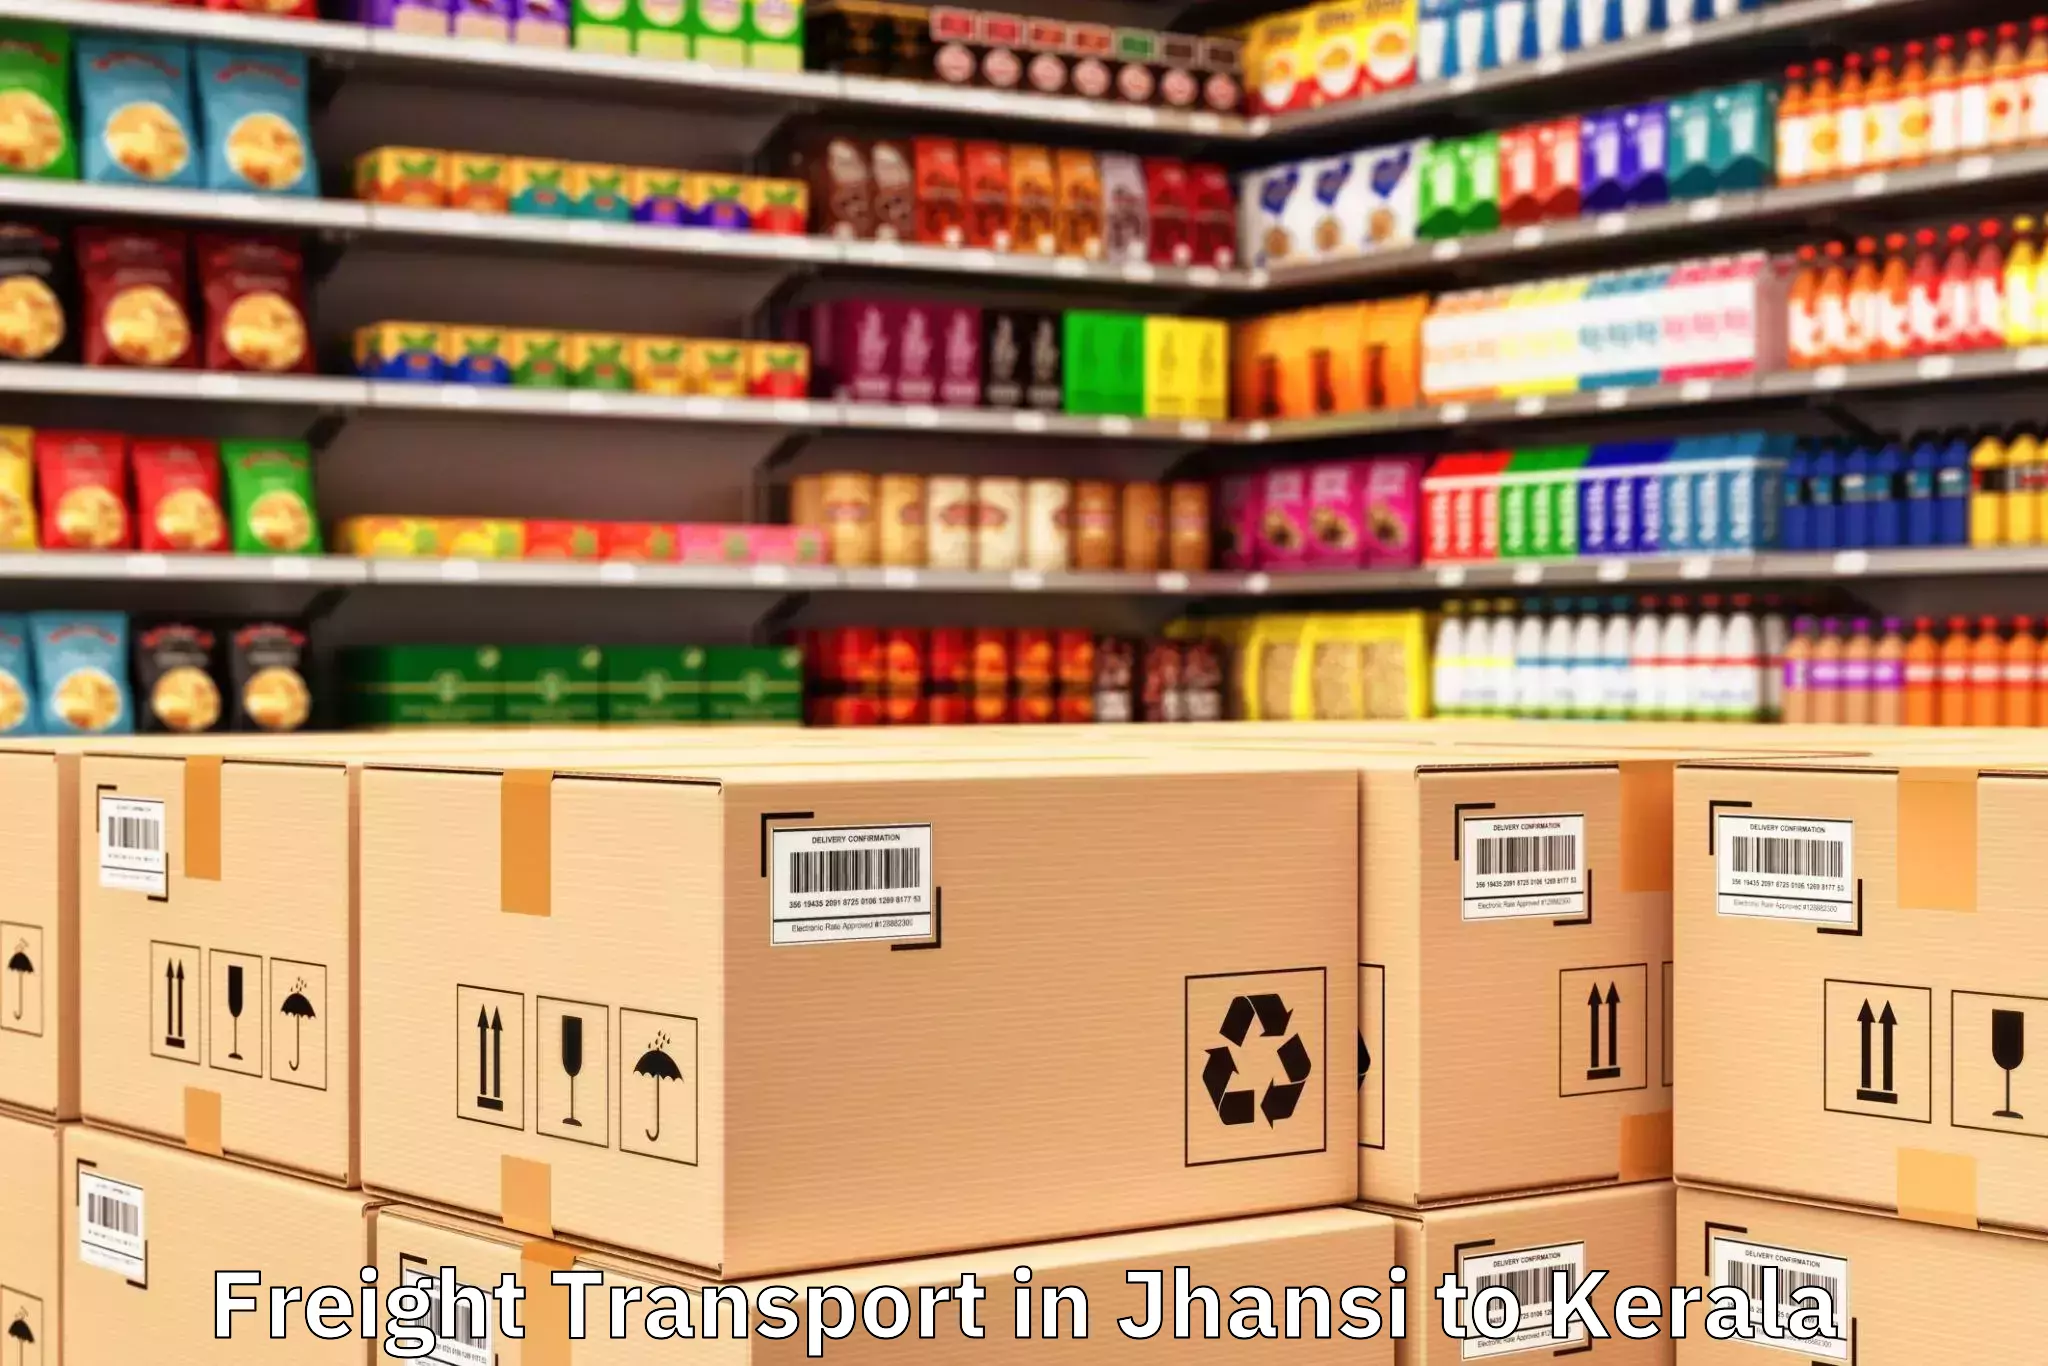 Quality Jhansi to Kerala Freight Transport